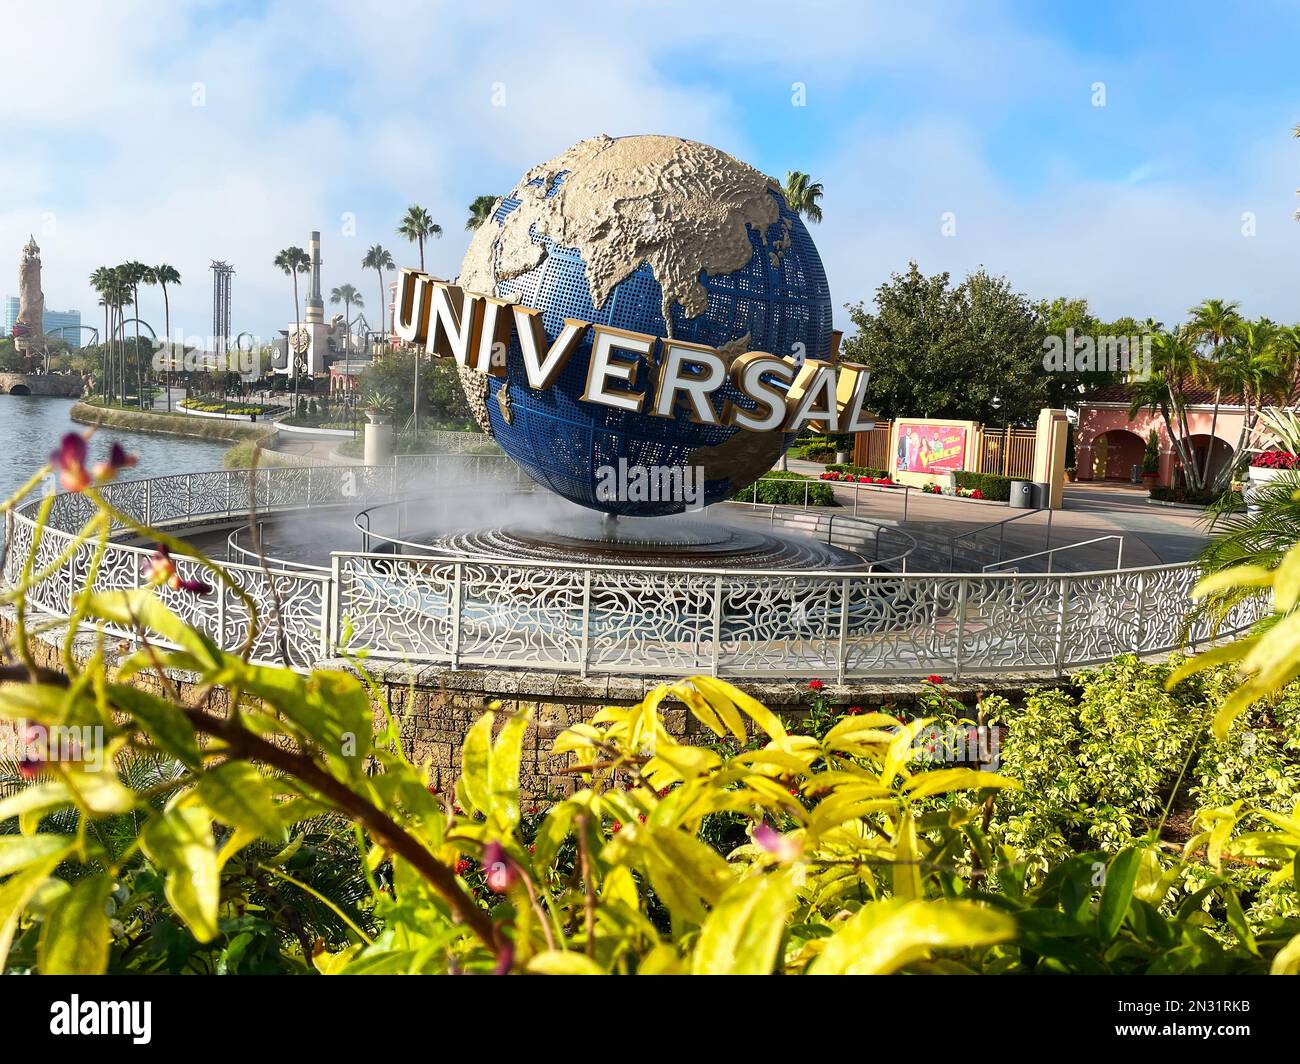 Universal Studios Florida Stockfoto